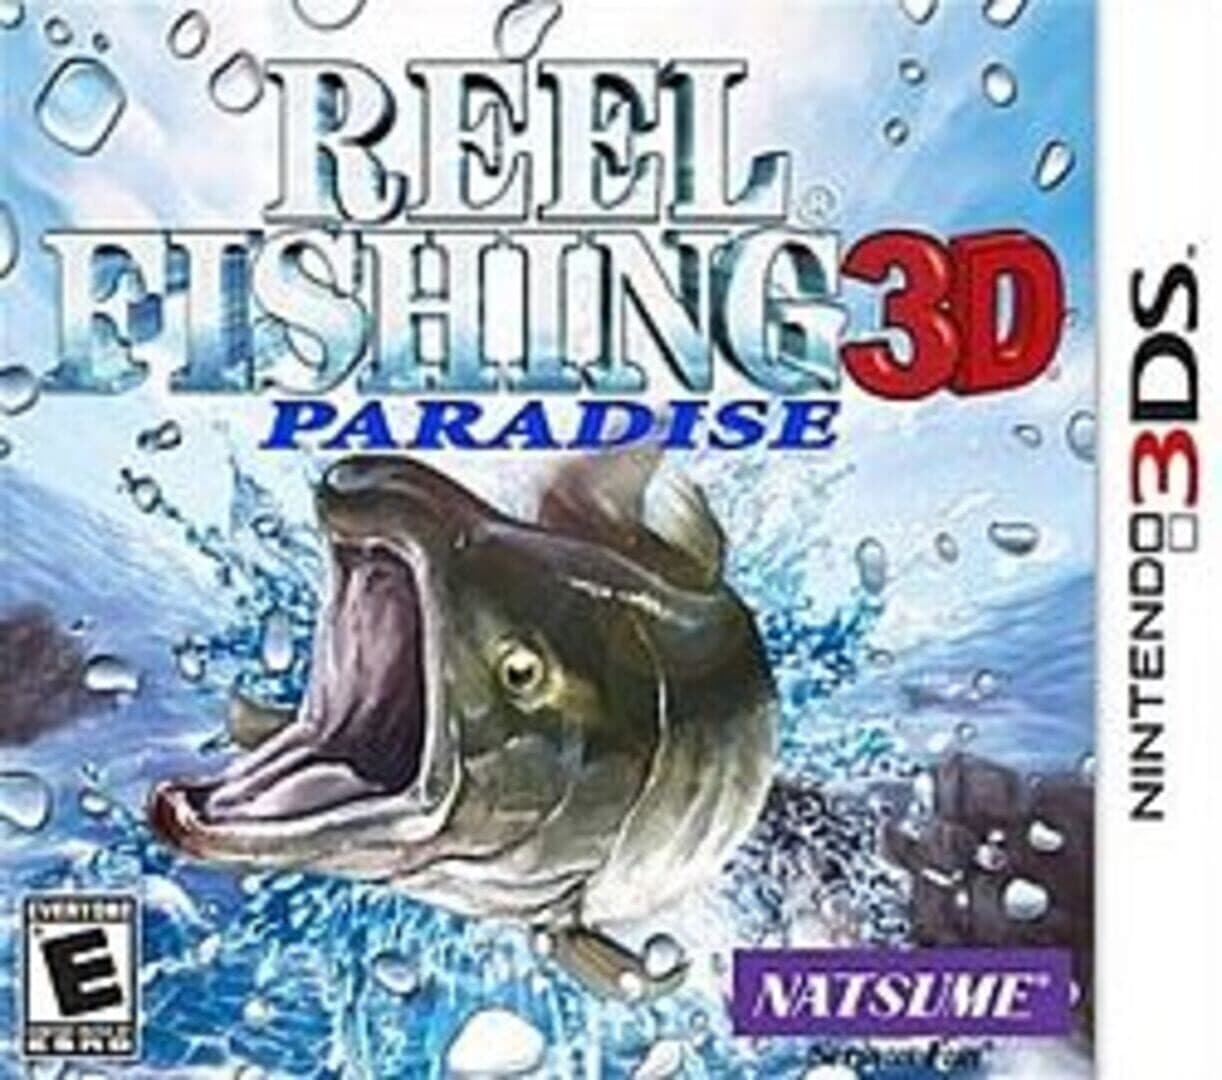 Reel Fishing Paradise 3D cover art